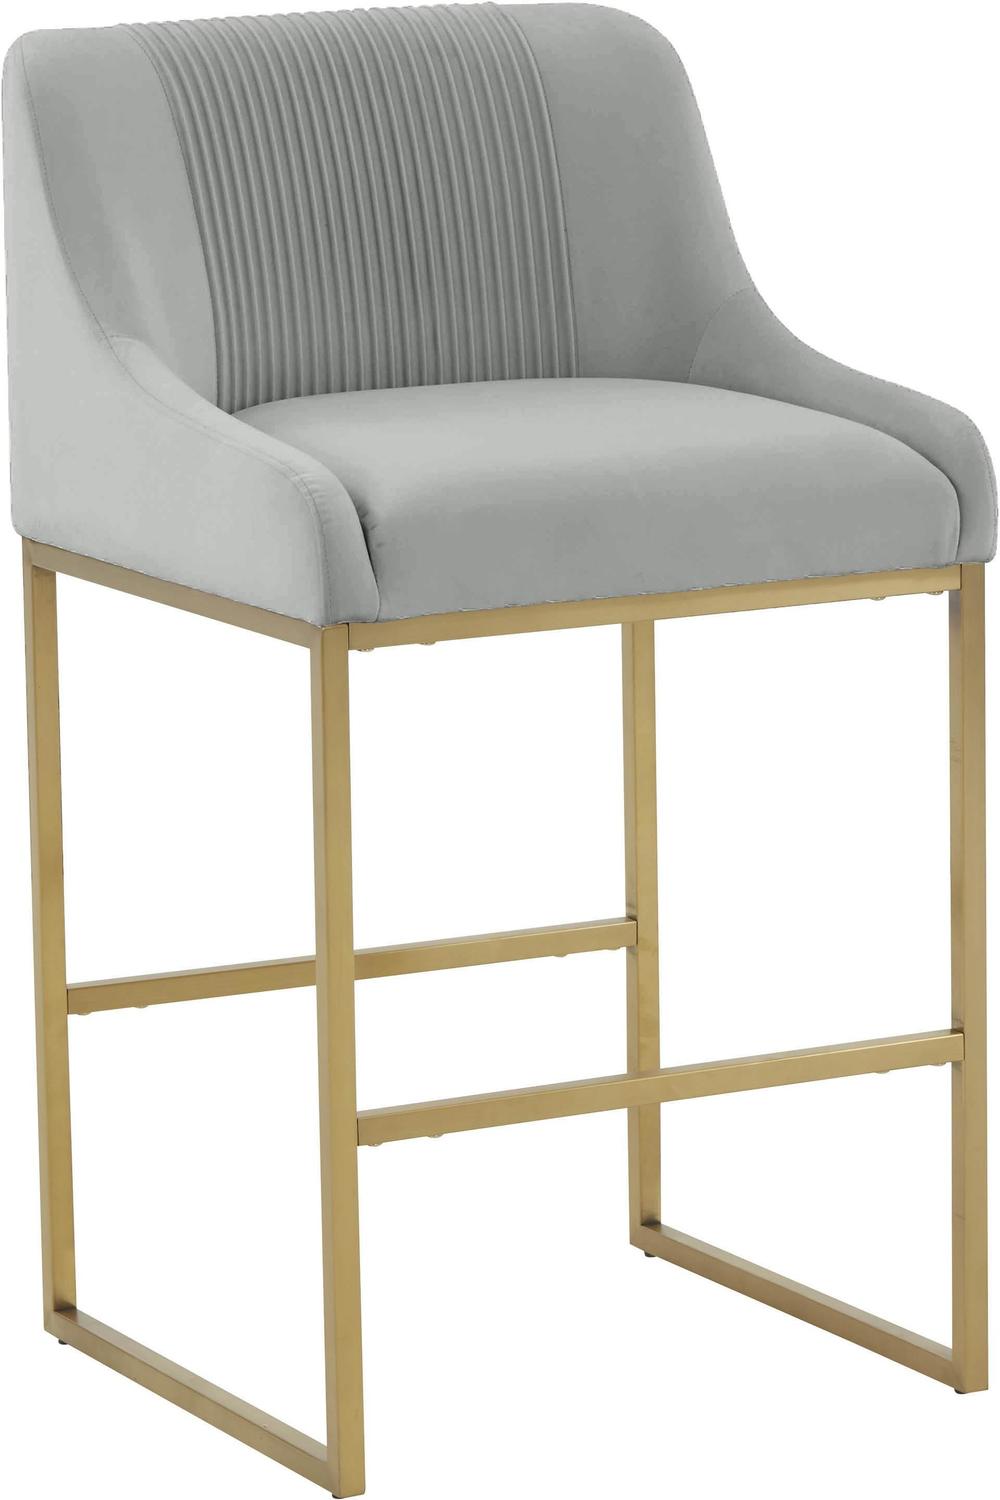 leather bar stools black Contemporary Design Furniture Stools Grey